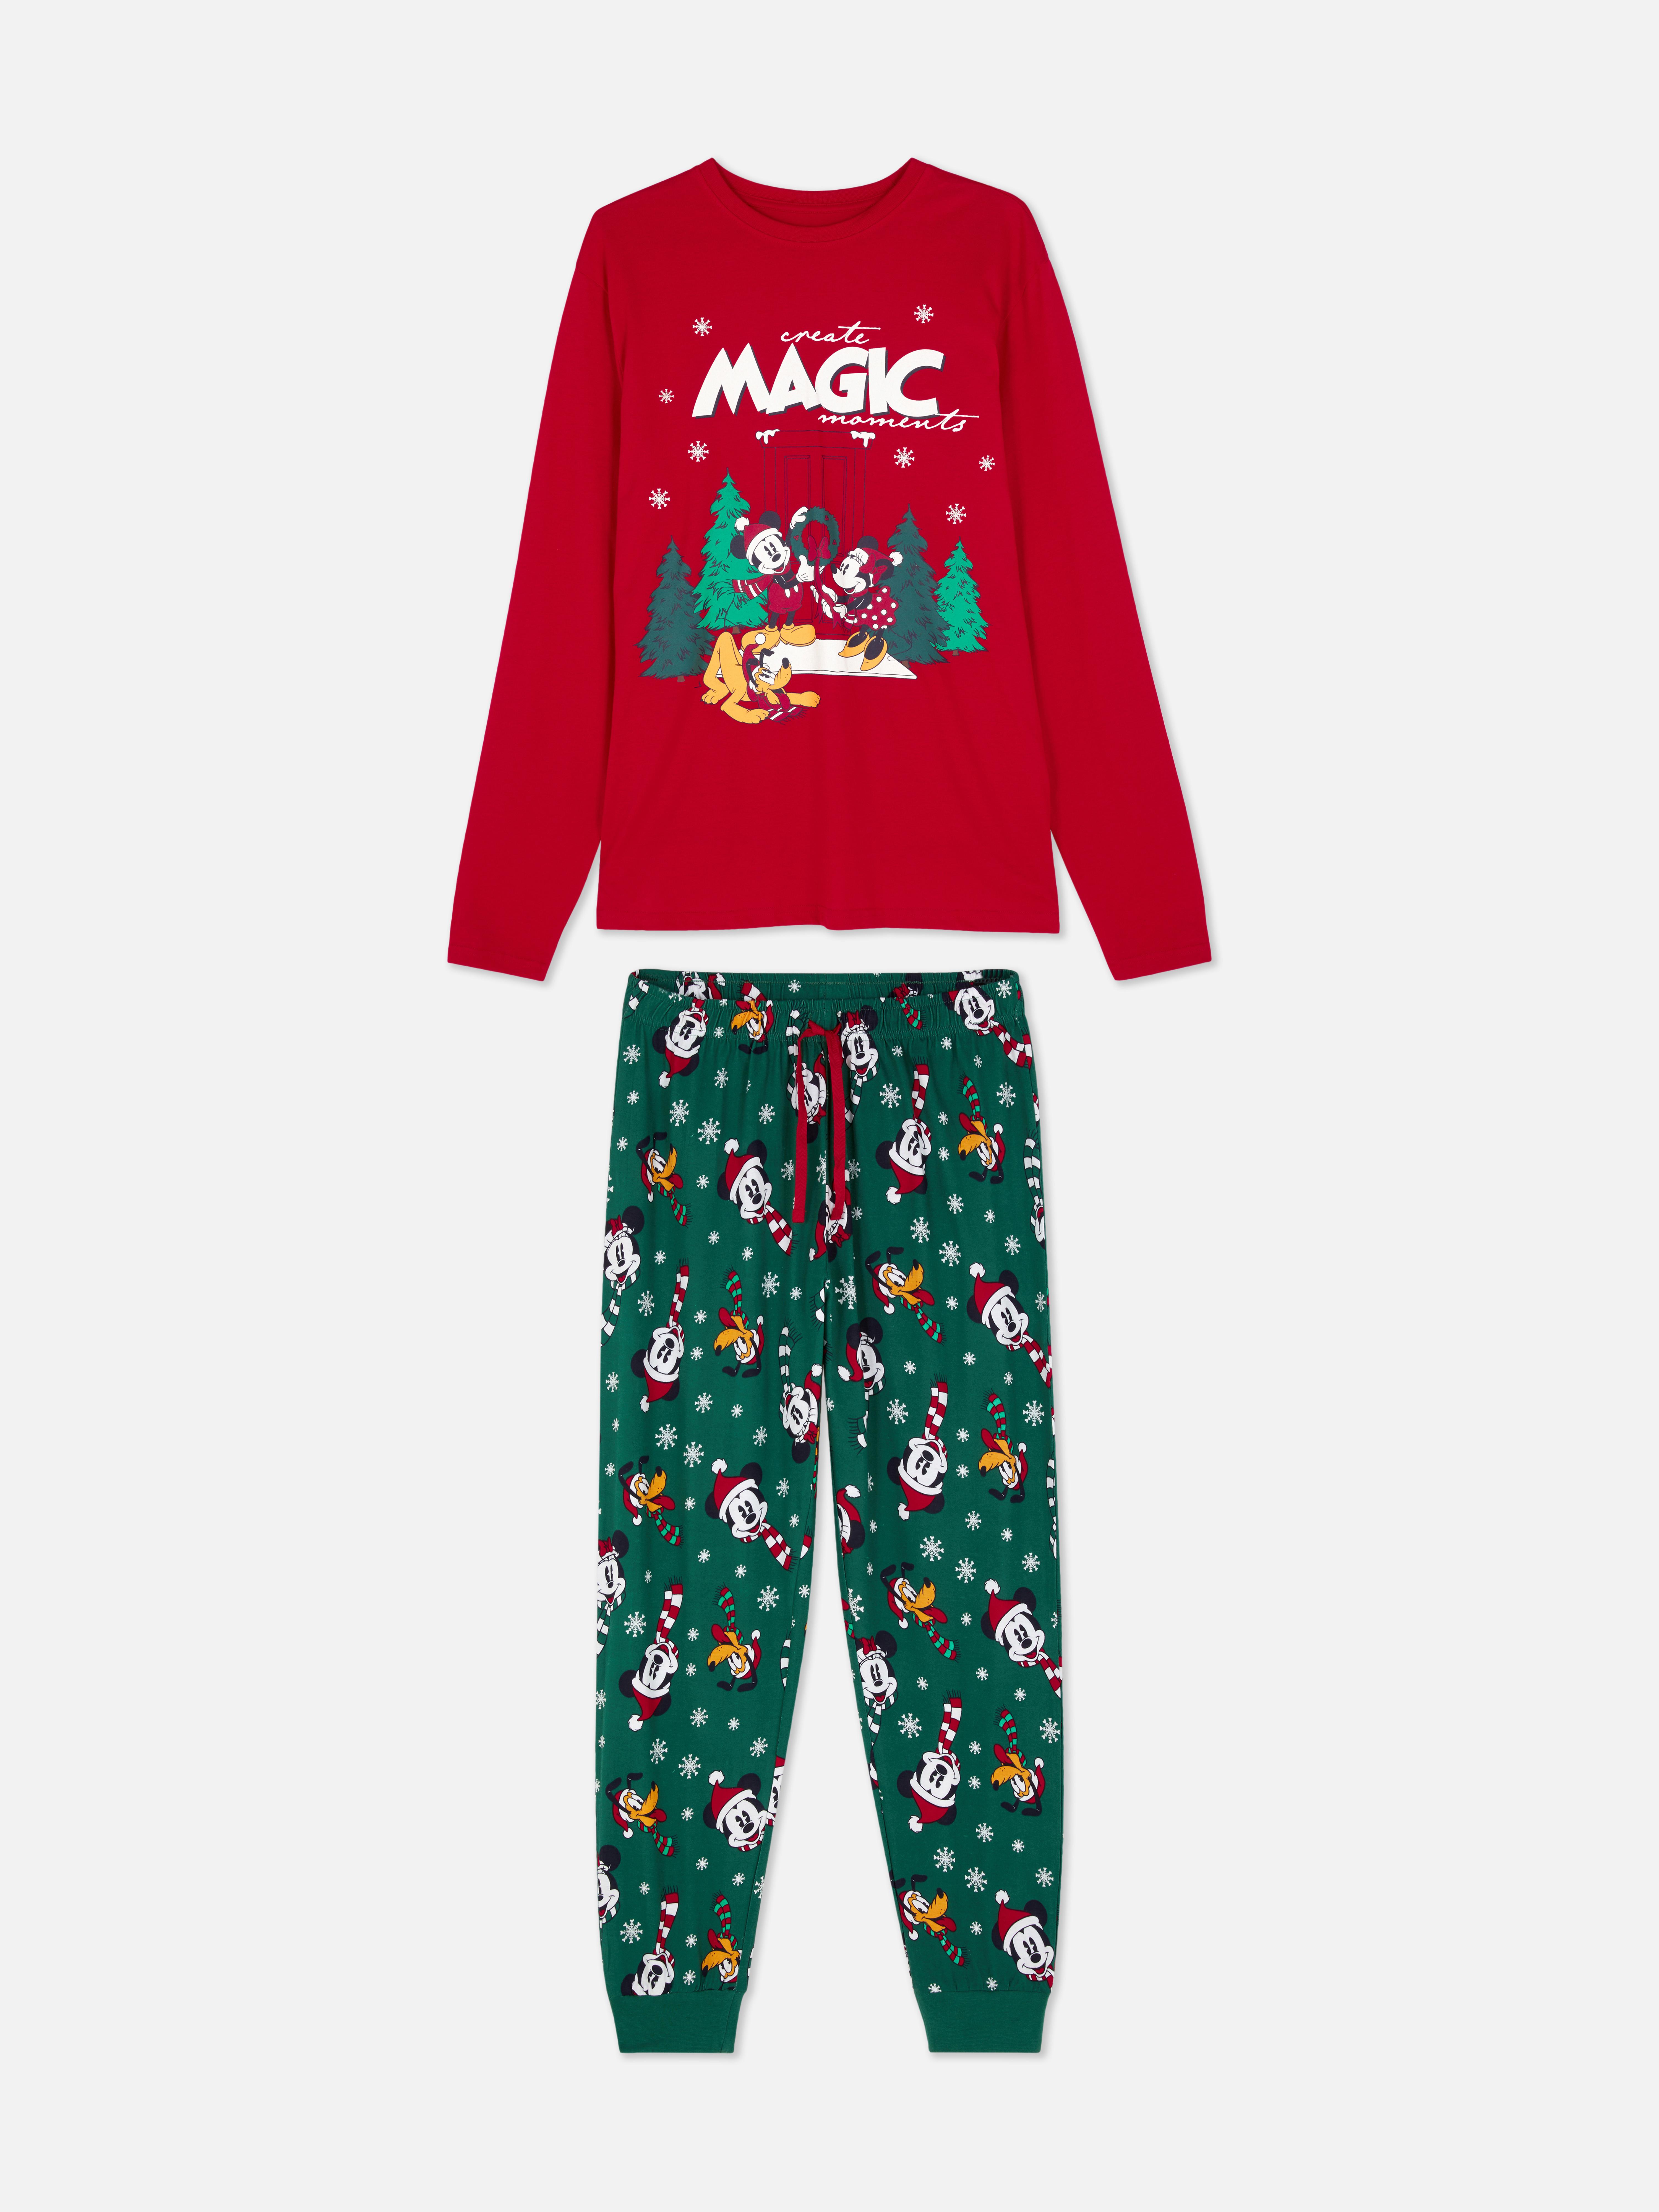 Men's Disney’s Mickey Mouse and Friends Christmas Family Pajamas